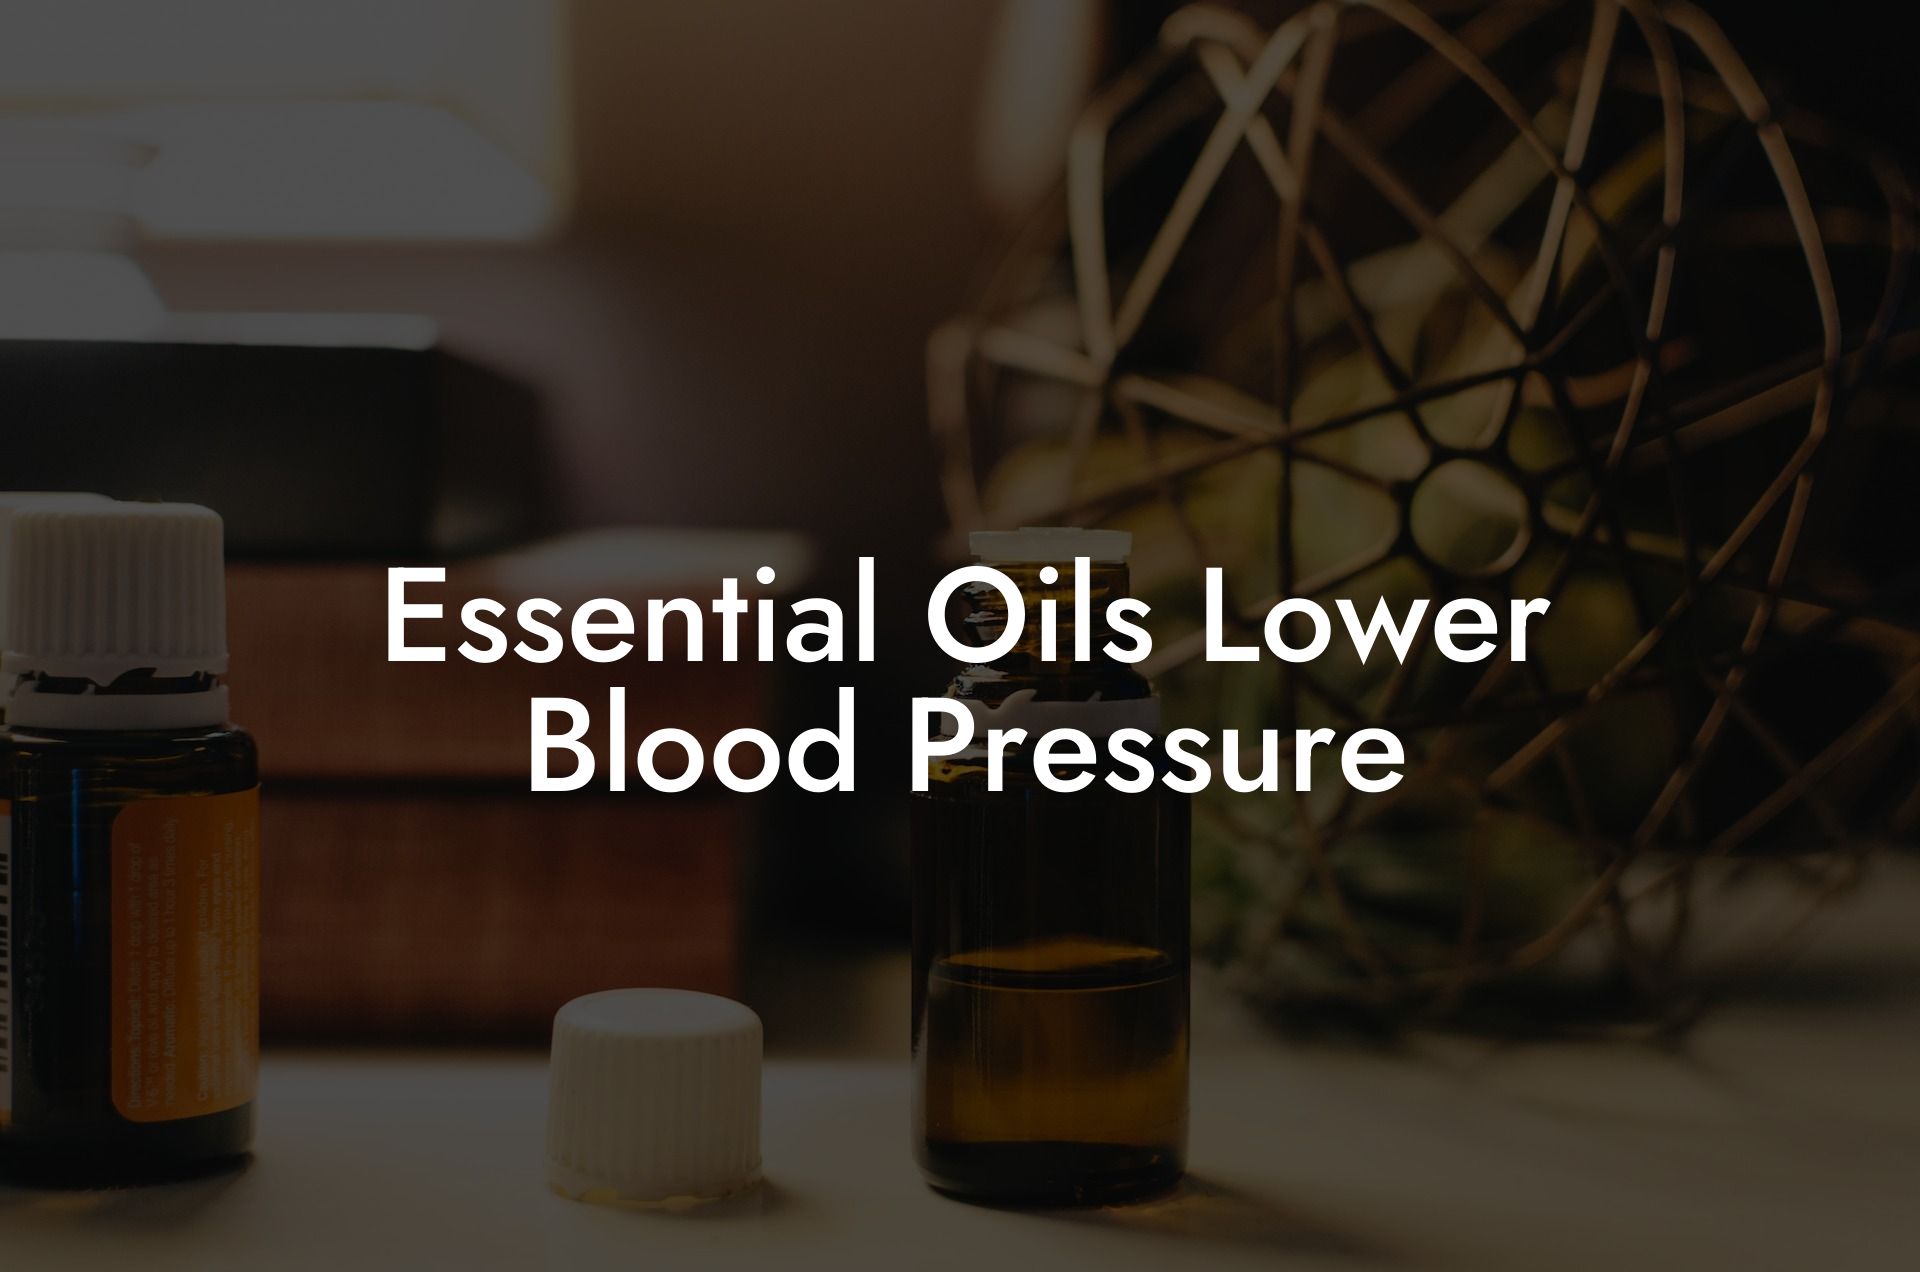 Essential Oils Lower Blood Pressure